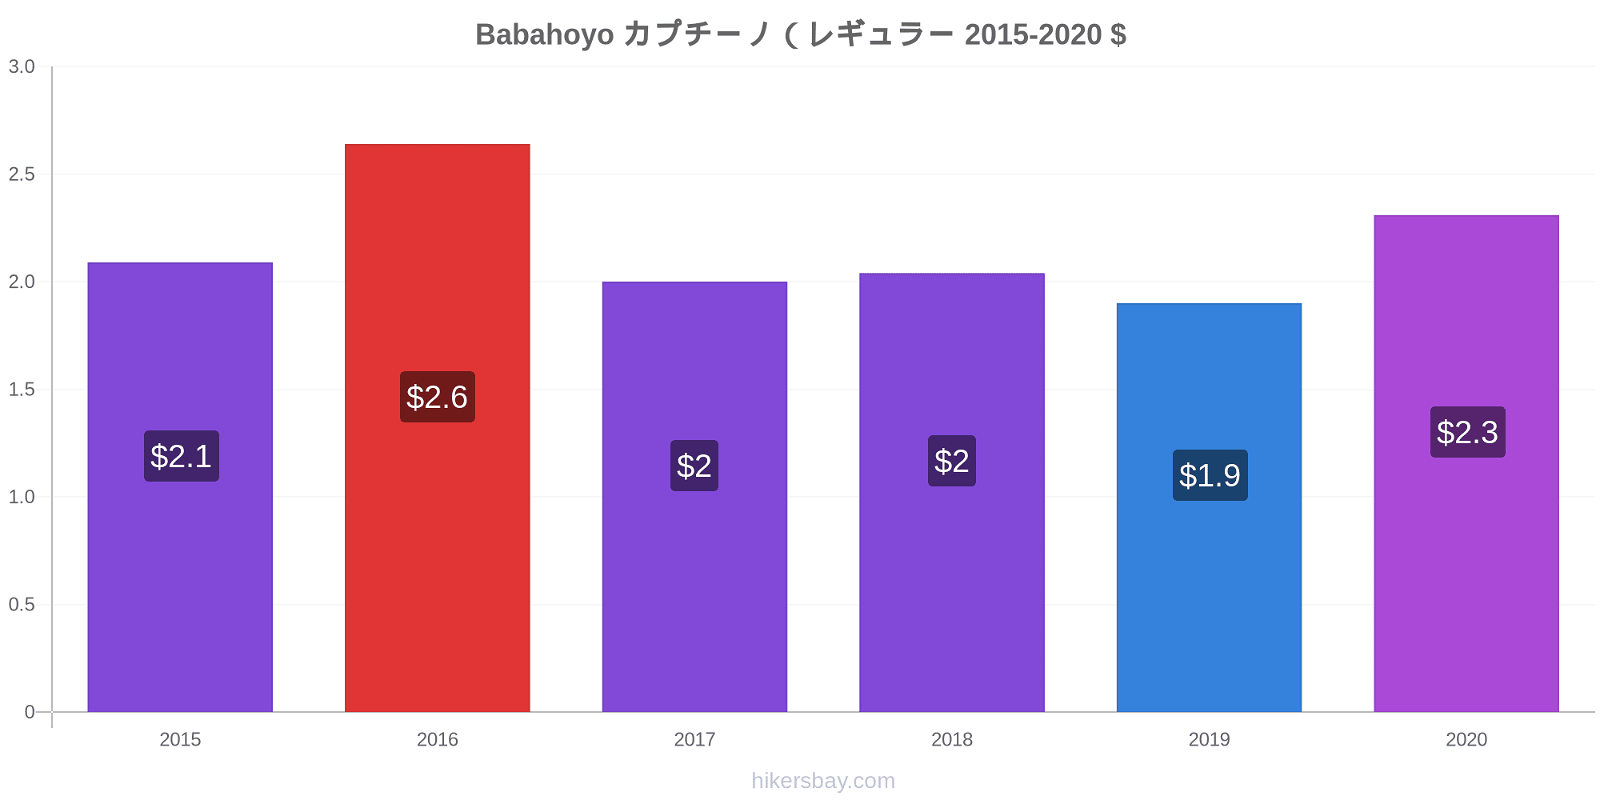 Babahoyo 価格変更 カプチーノ (レギュラー) hikersbay.com